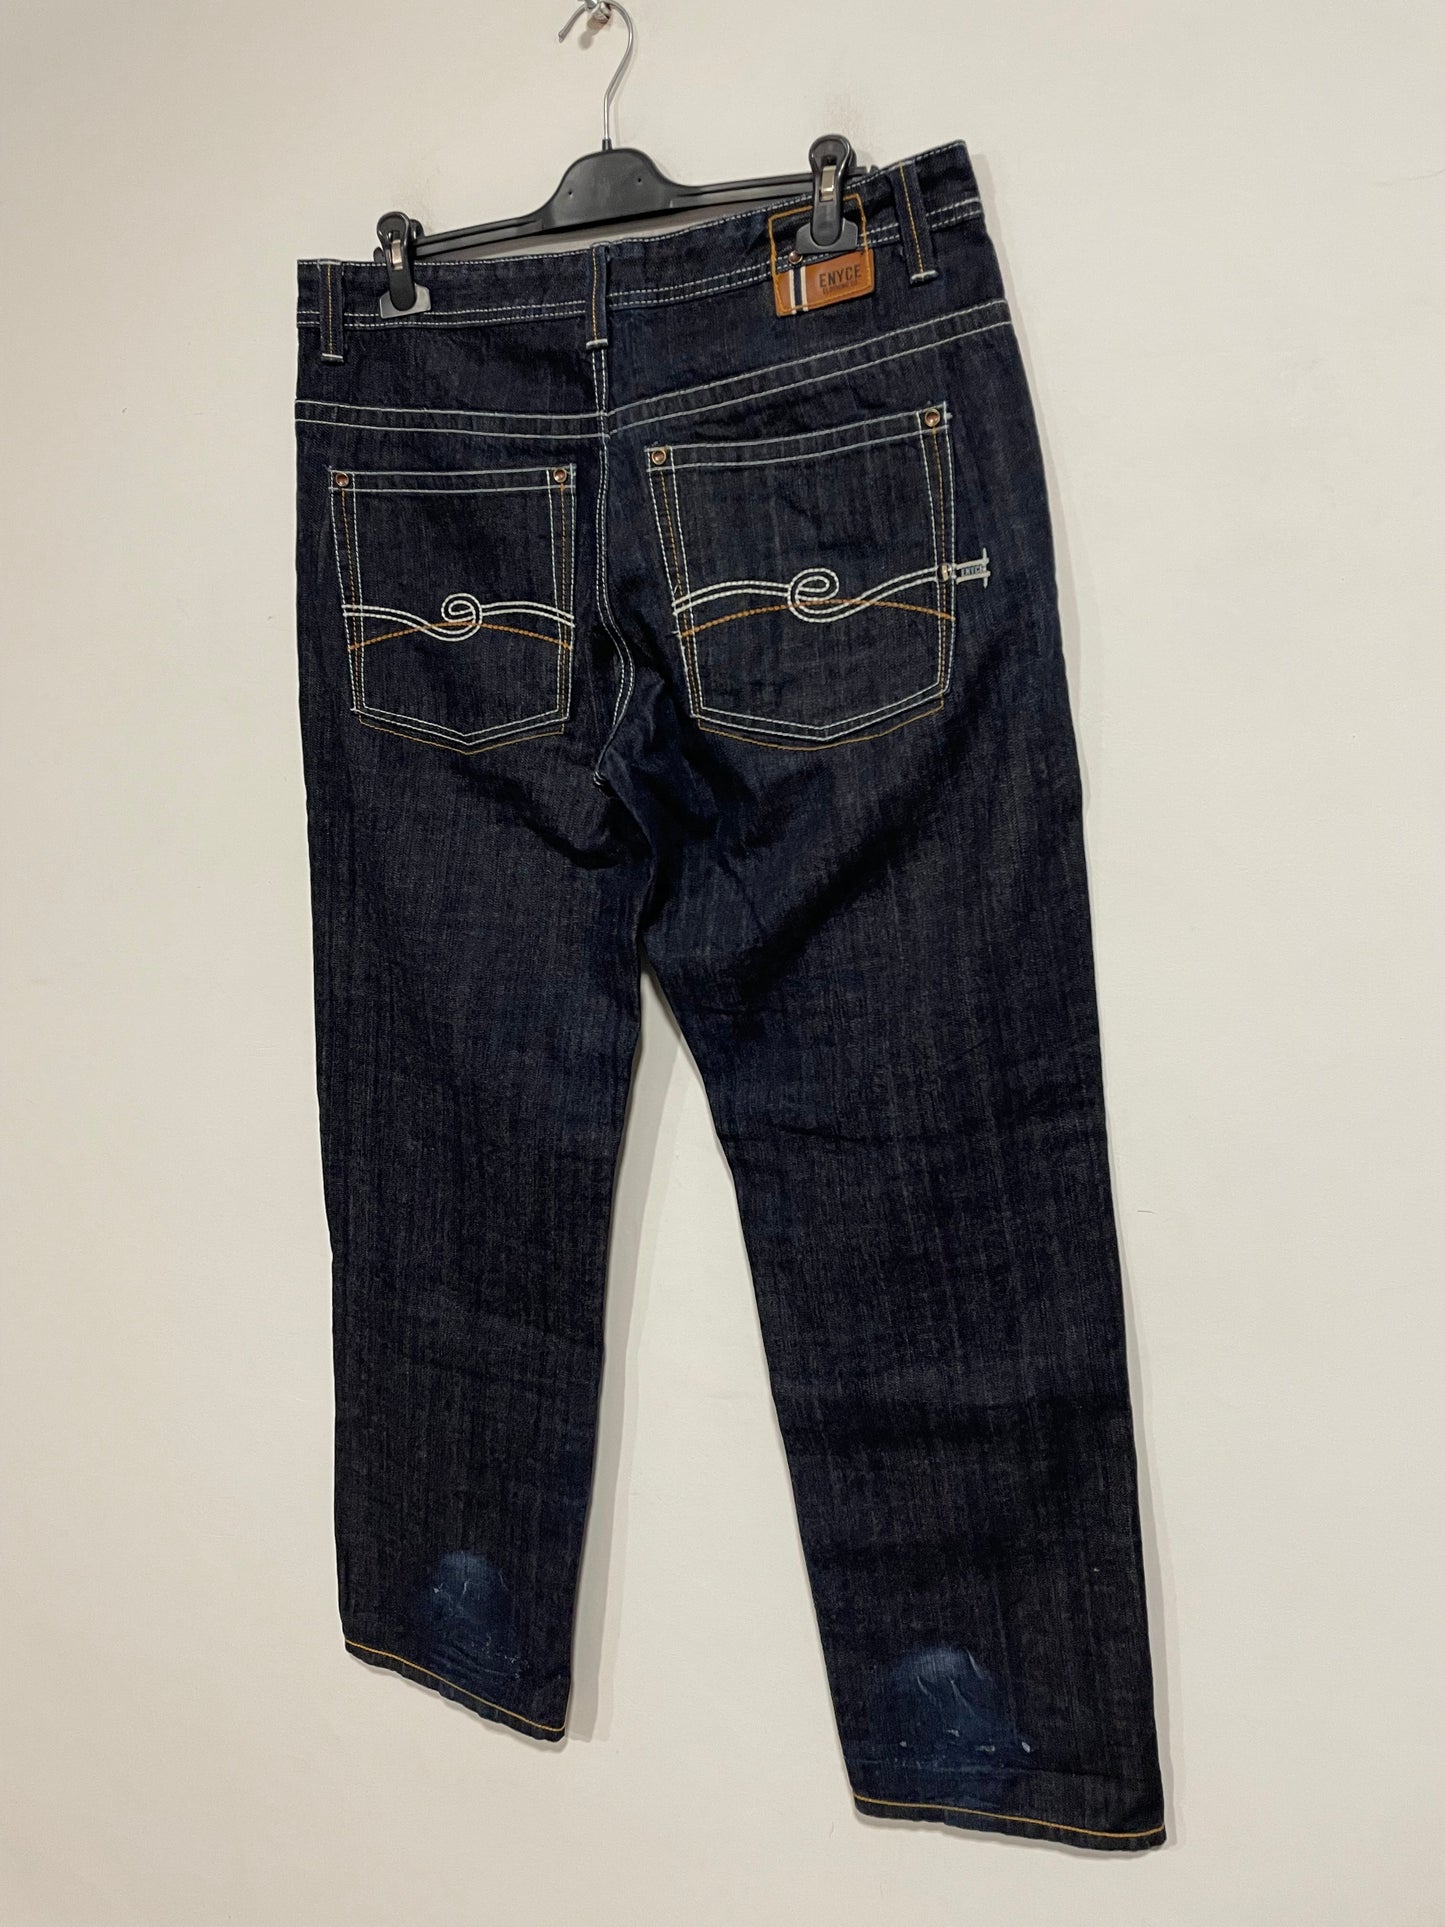 Jeans baggy Enyce hip hop (D523)